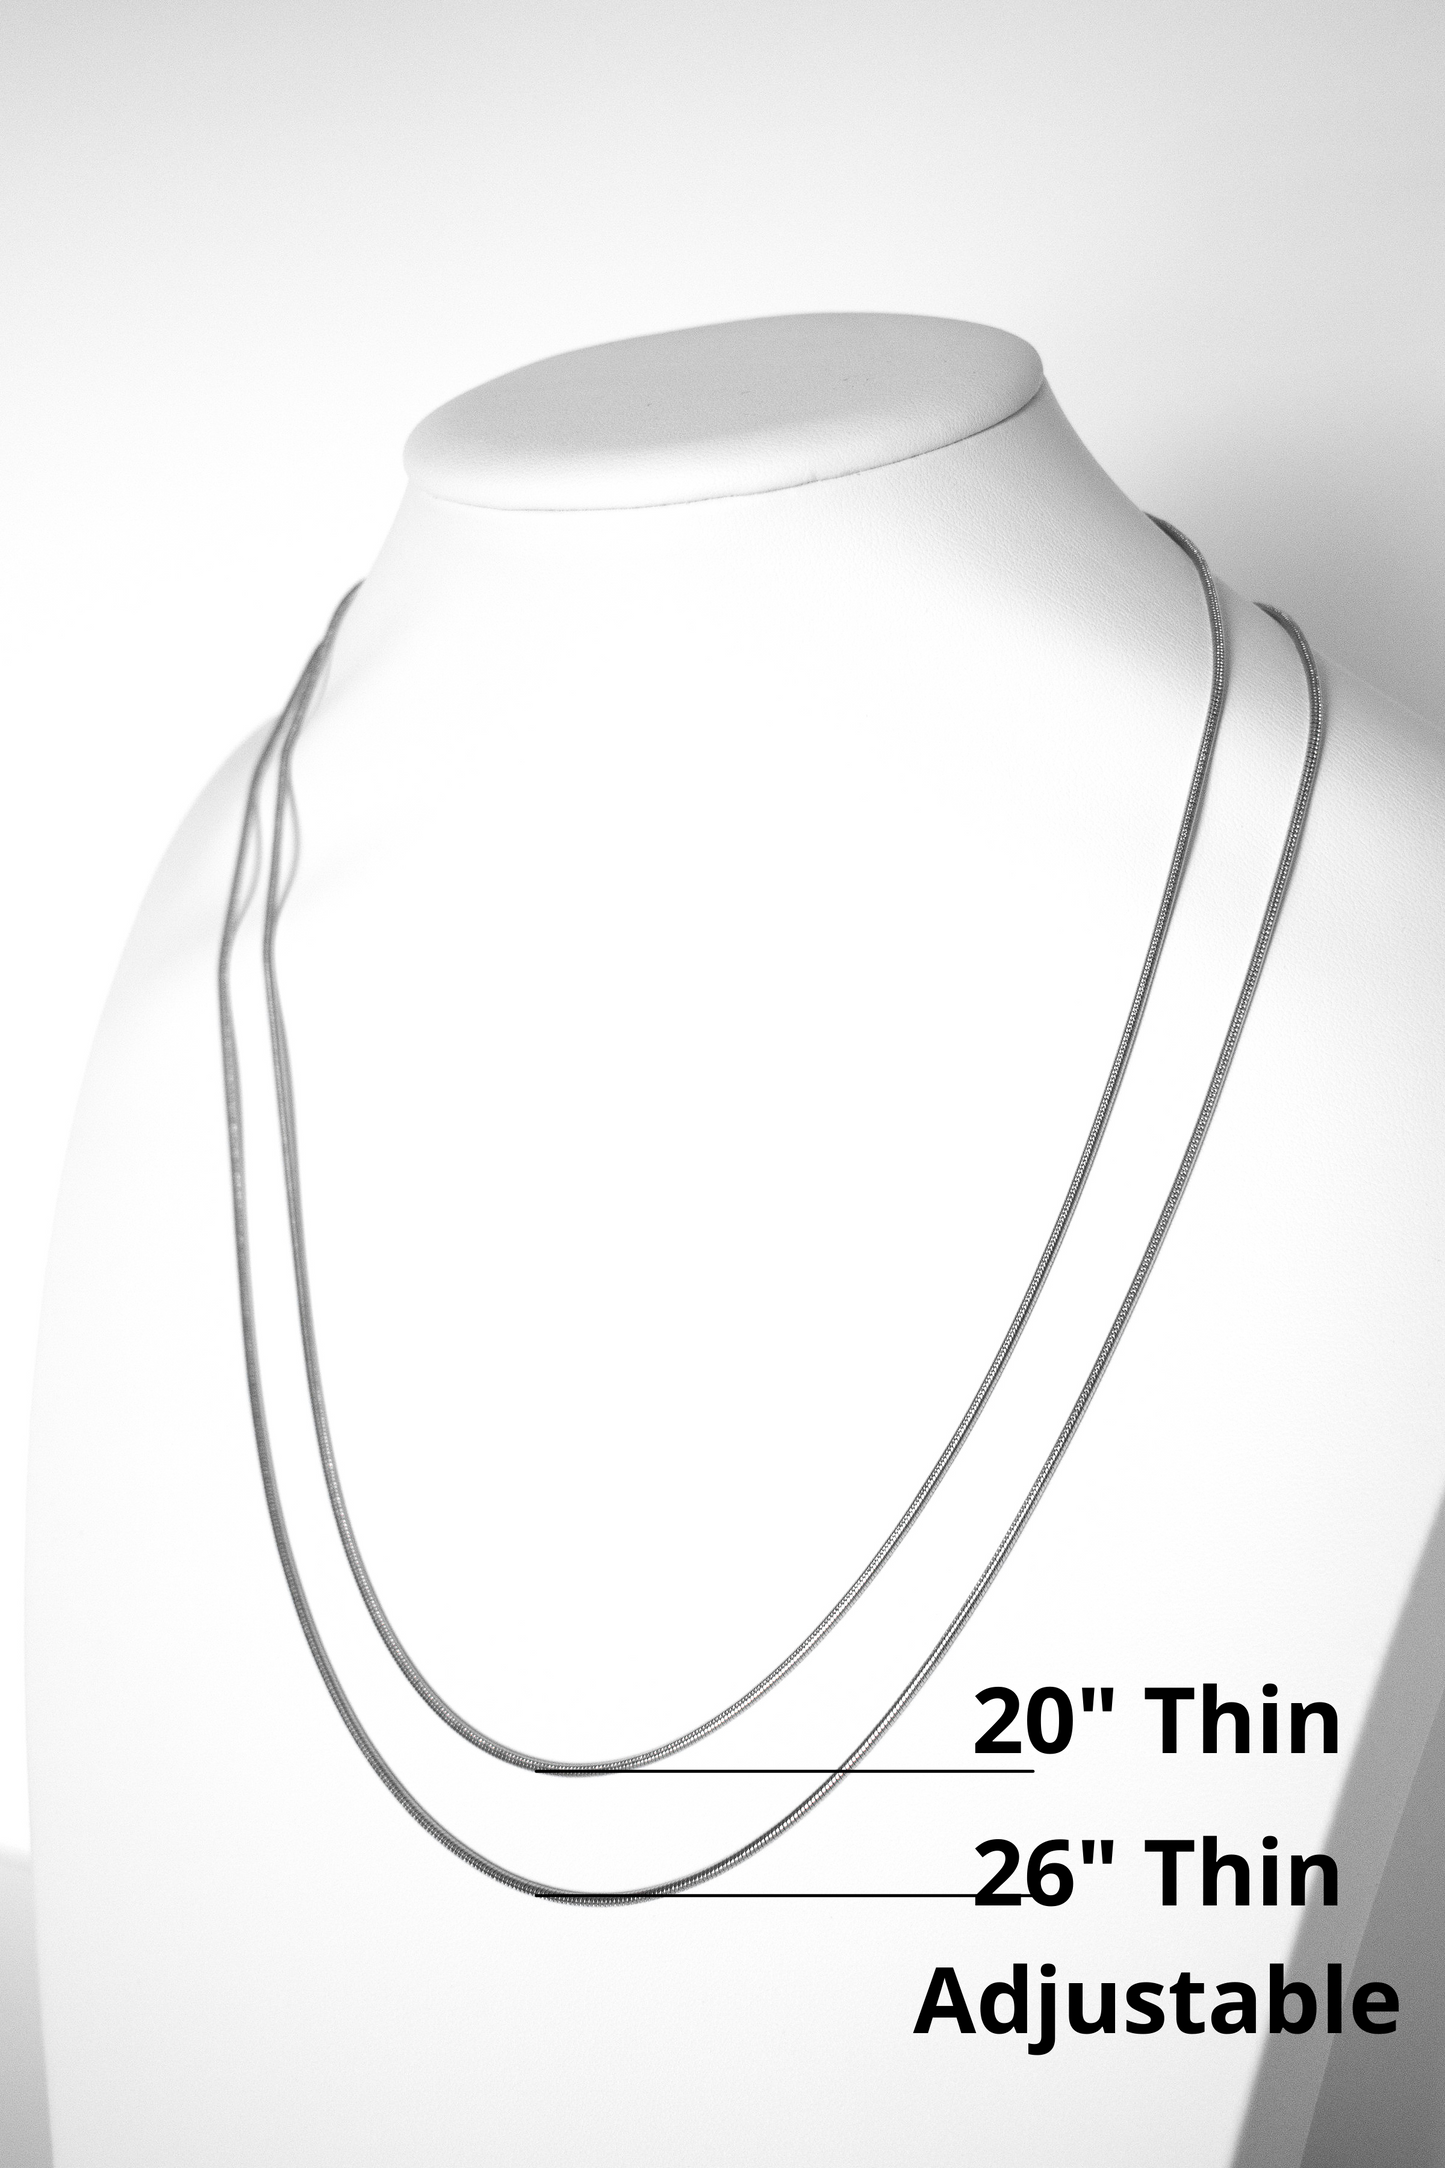 Sea Turtle Jewelry Gifts -Sea Turtle Pendant - Necklaces - Earrings - Keychain